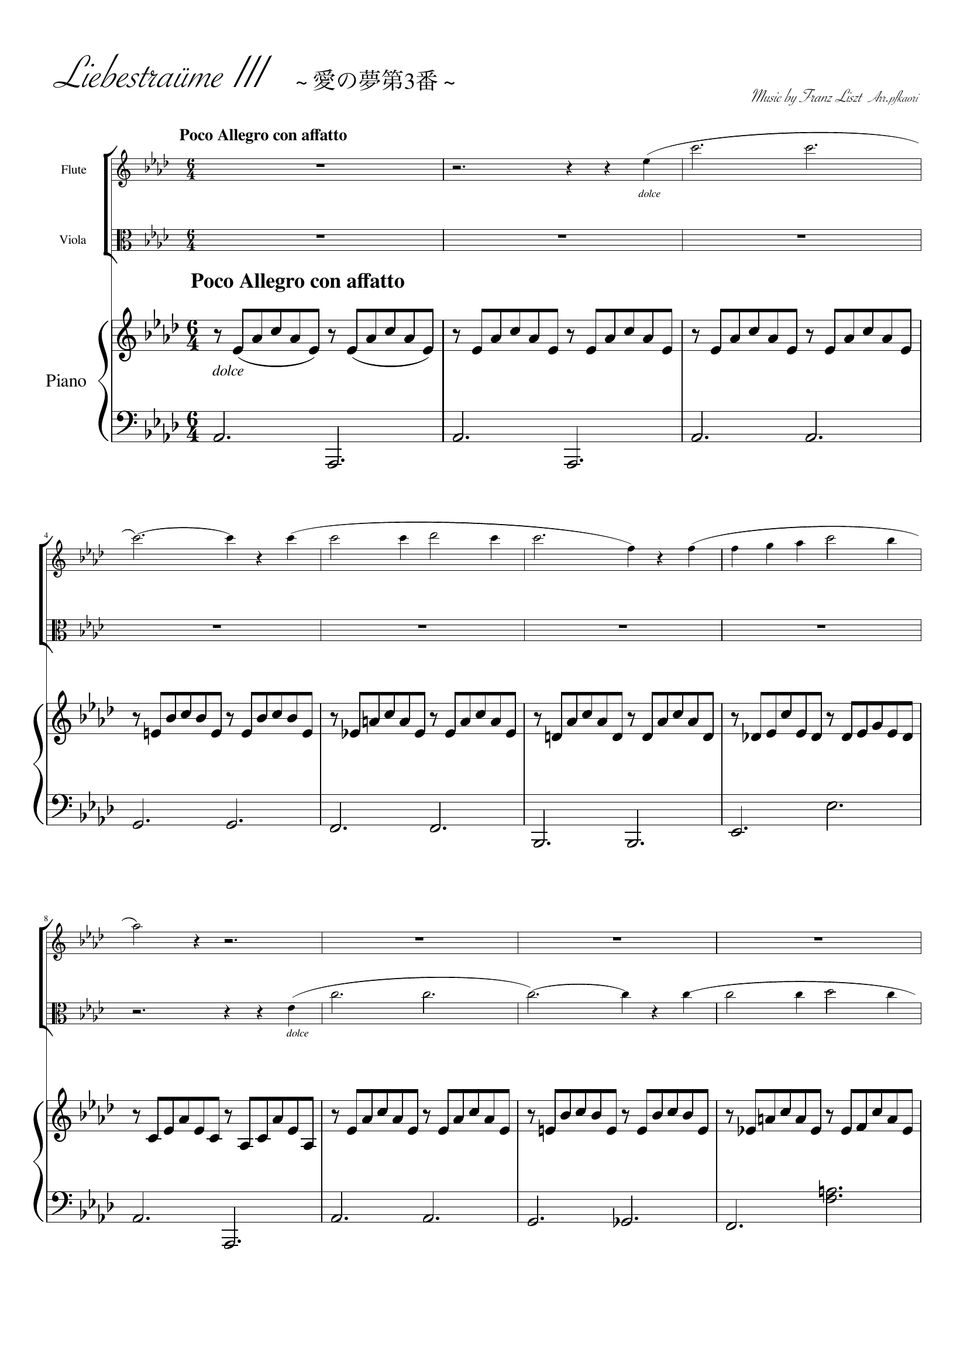 Franz Liszt - Liebestraum No. 3 (As・Piano trio / flute&viola) by pfkaori